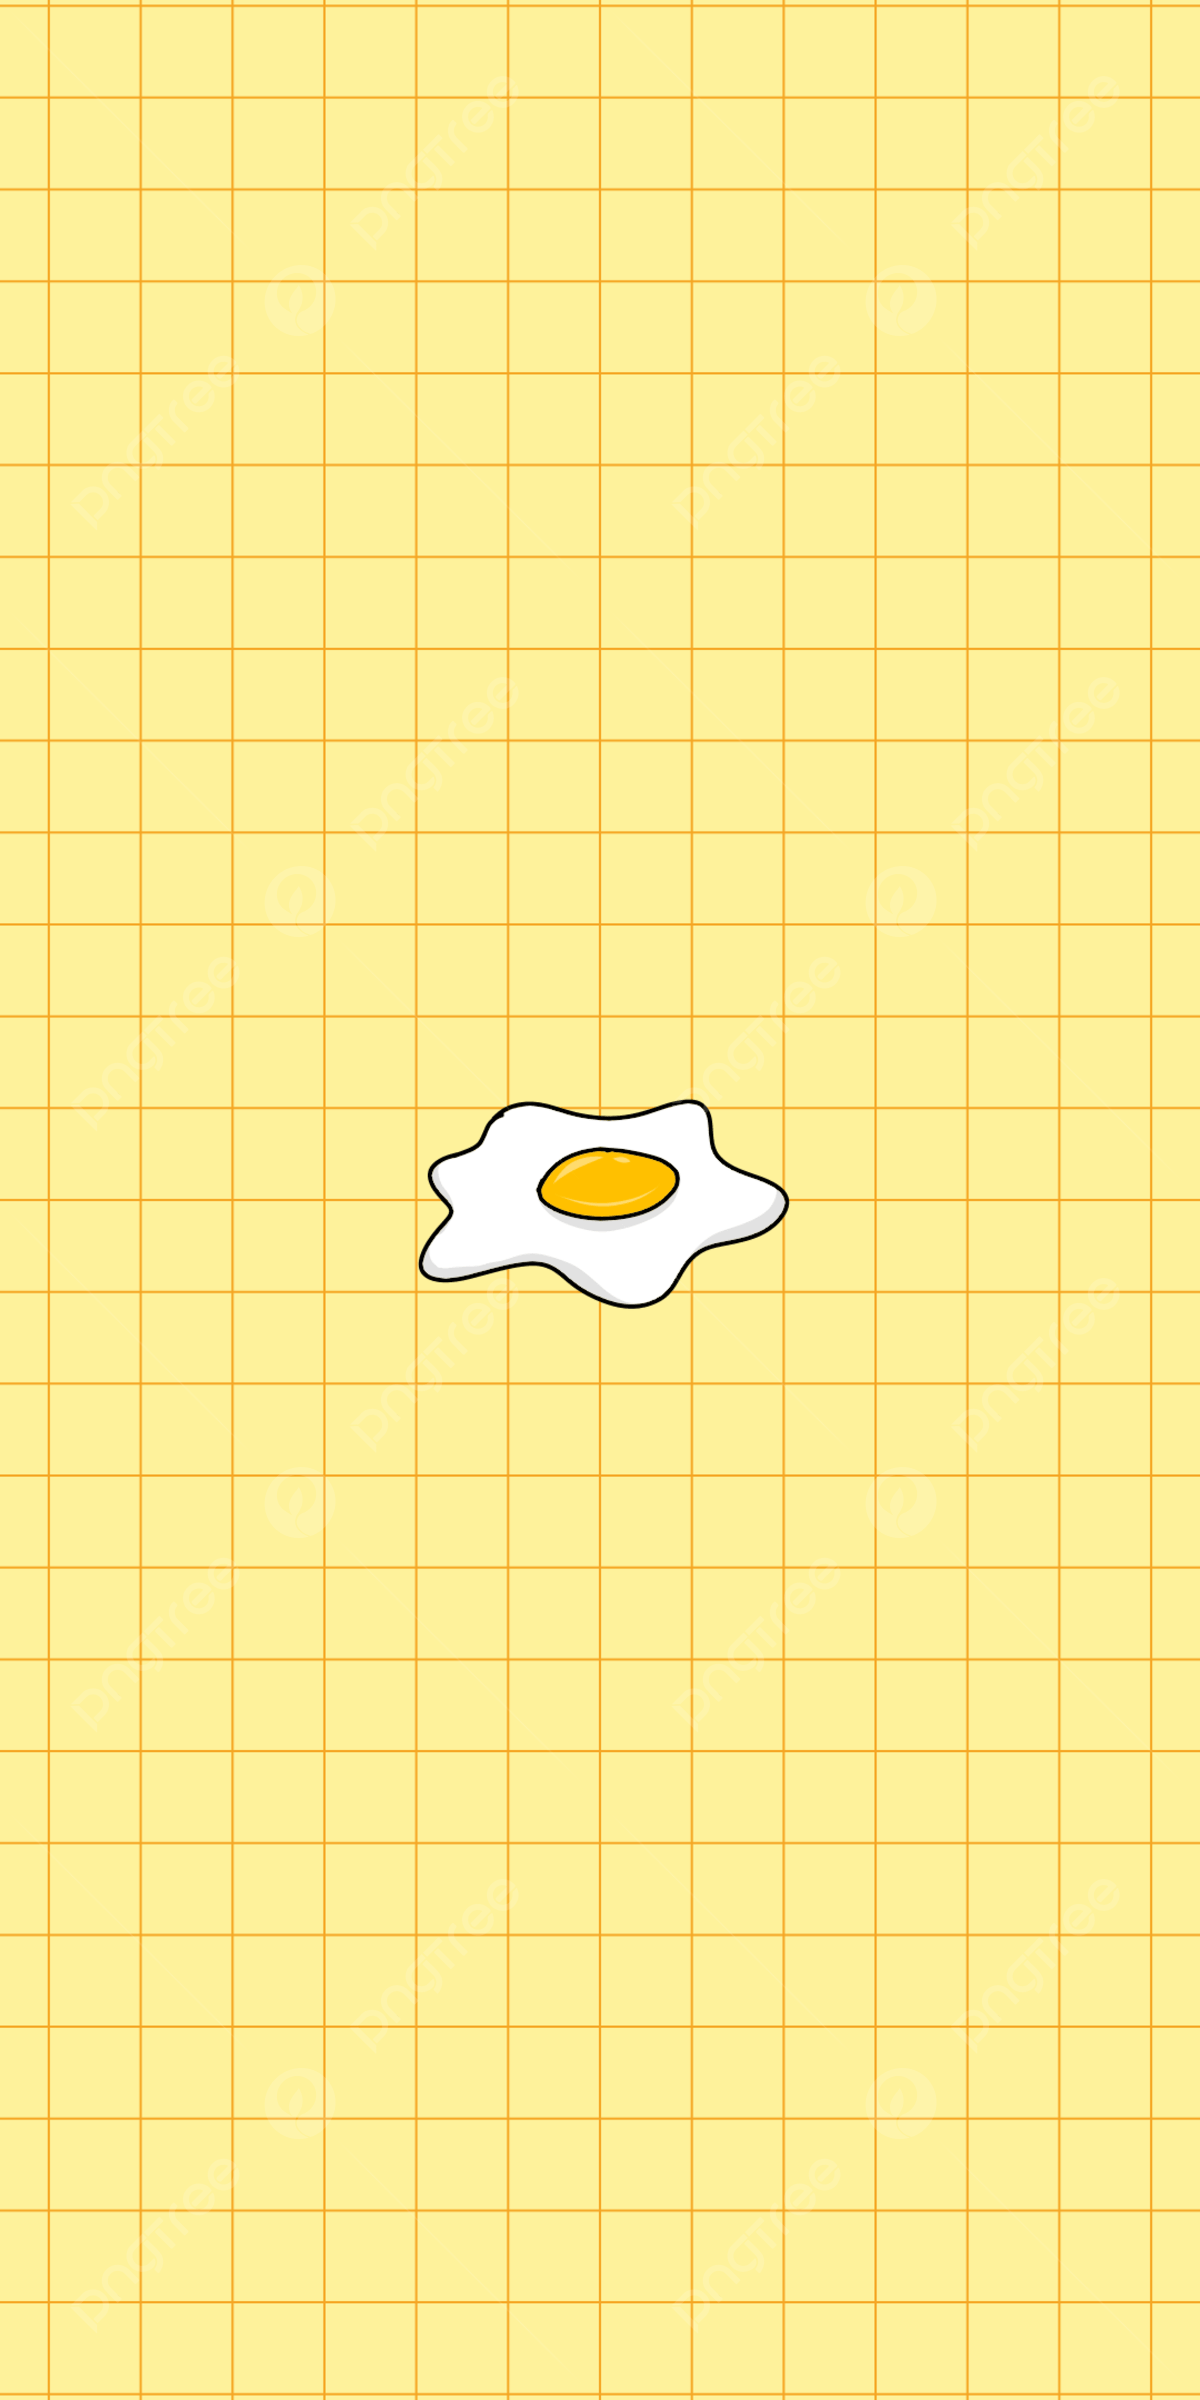 An egg on a yellow background - Gudetama